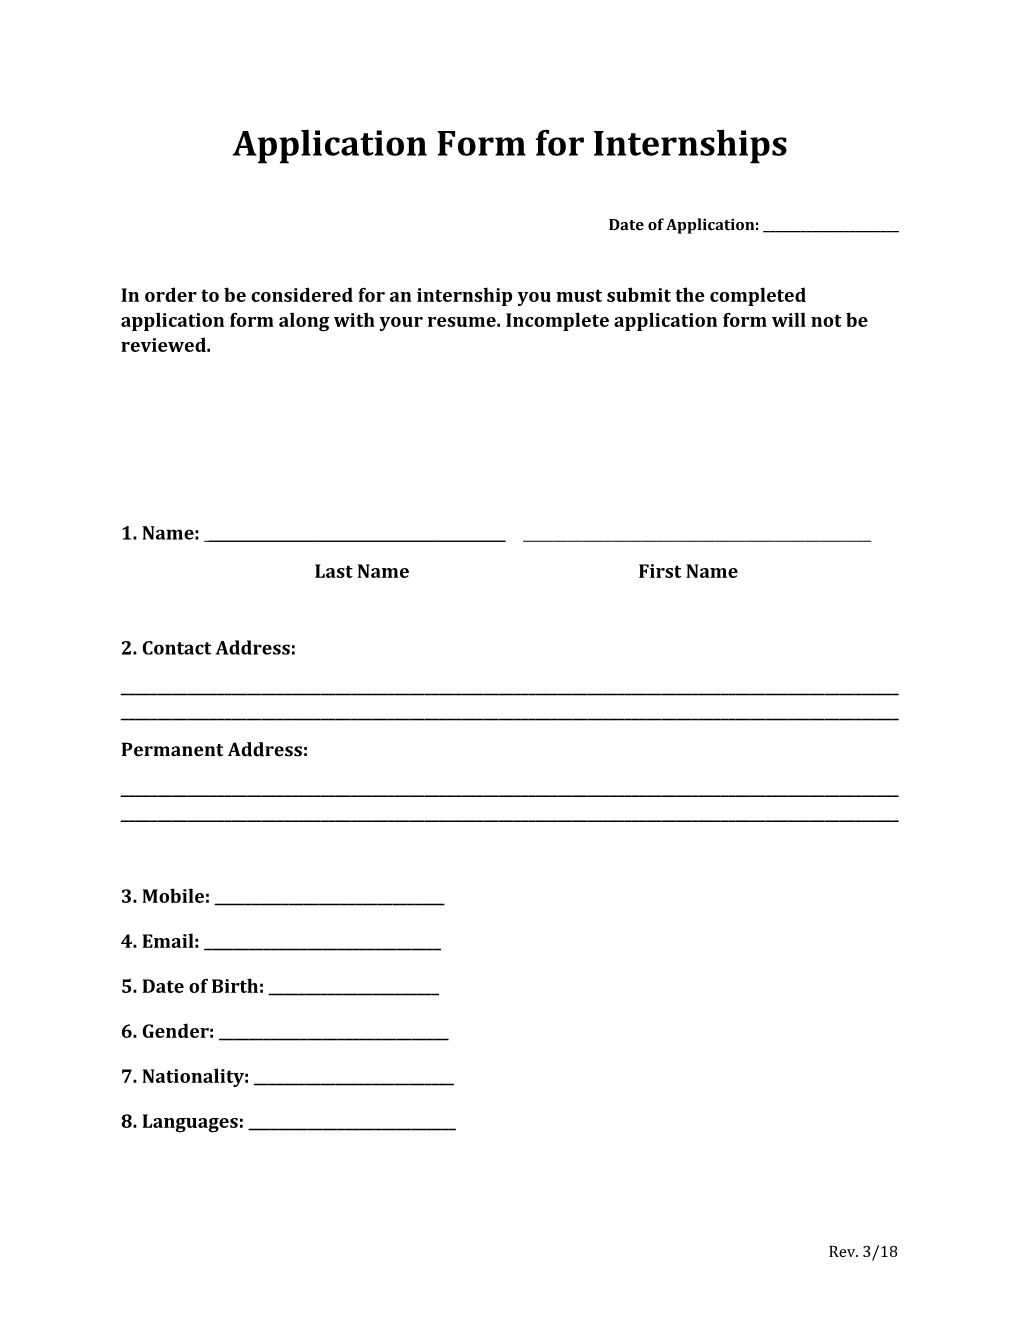 Application Form for Internships